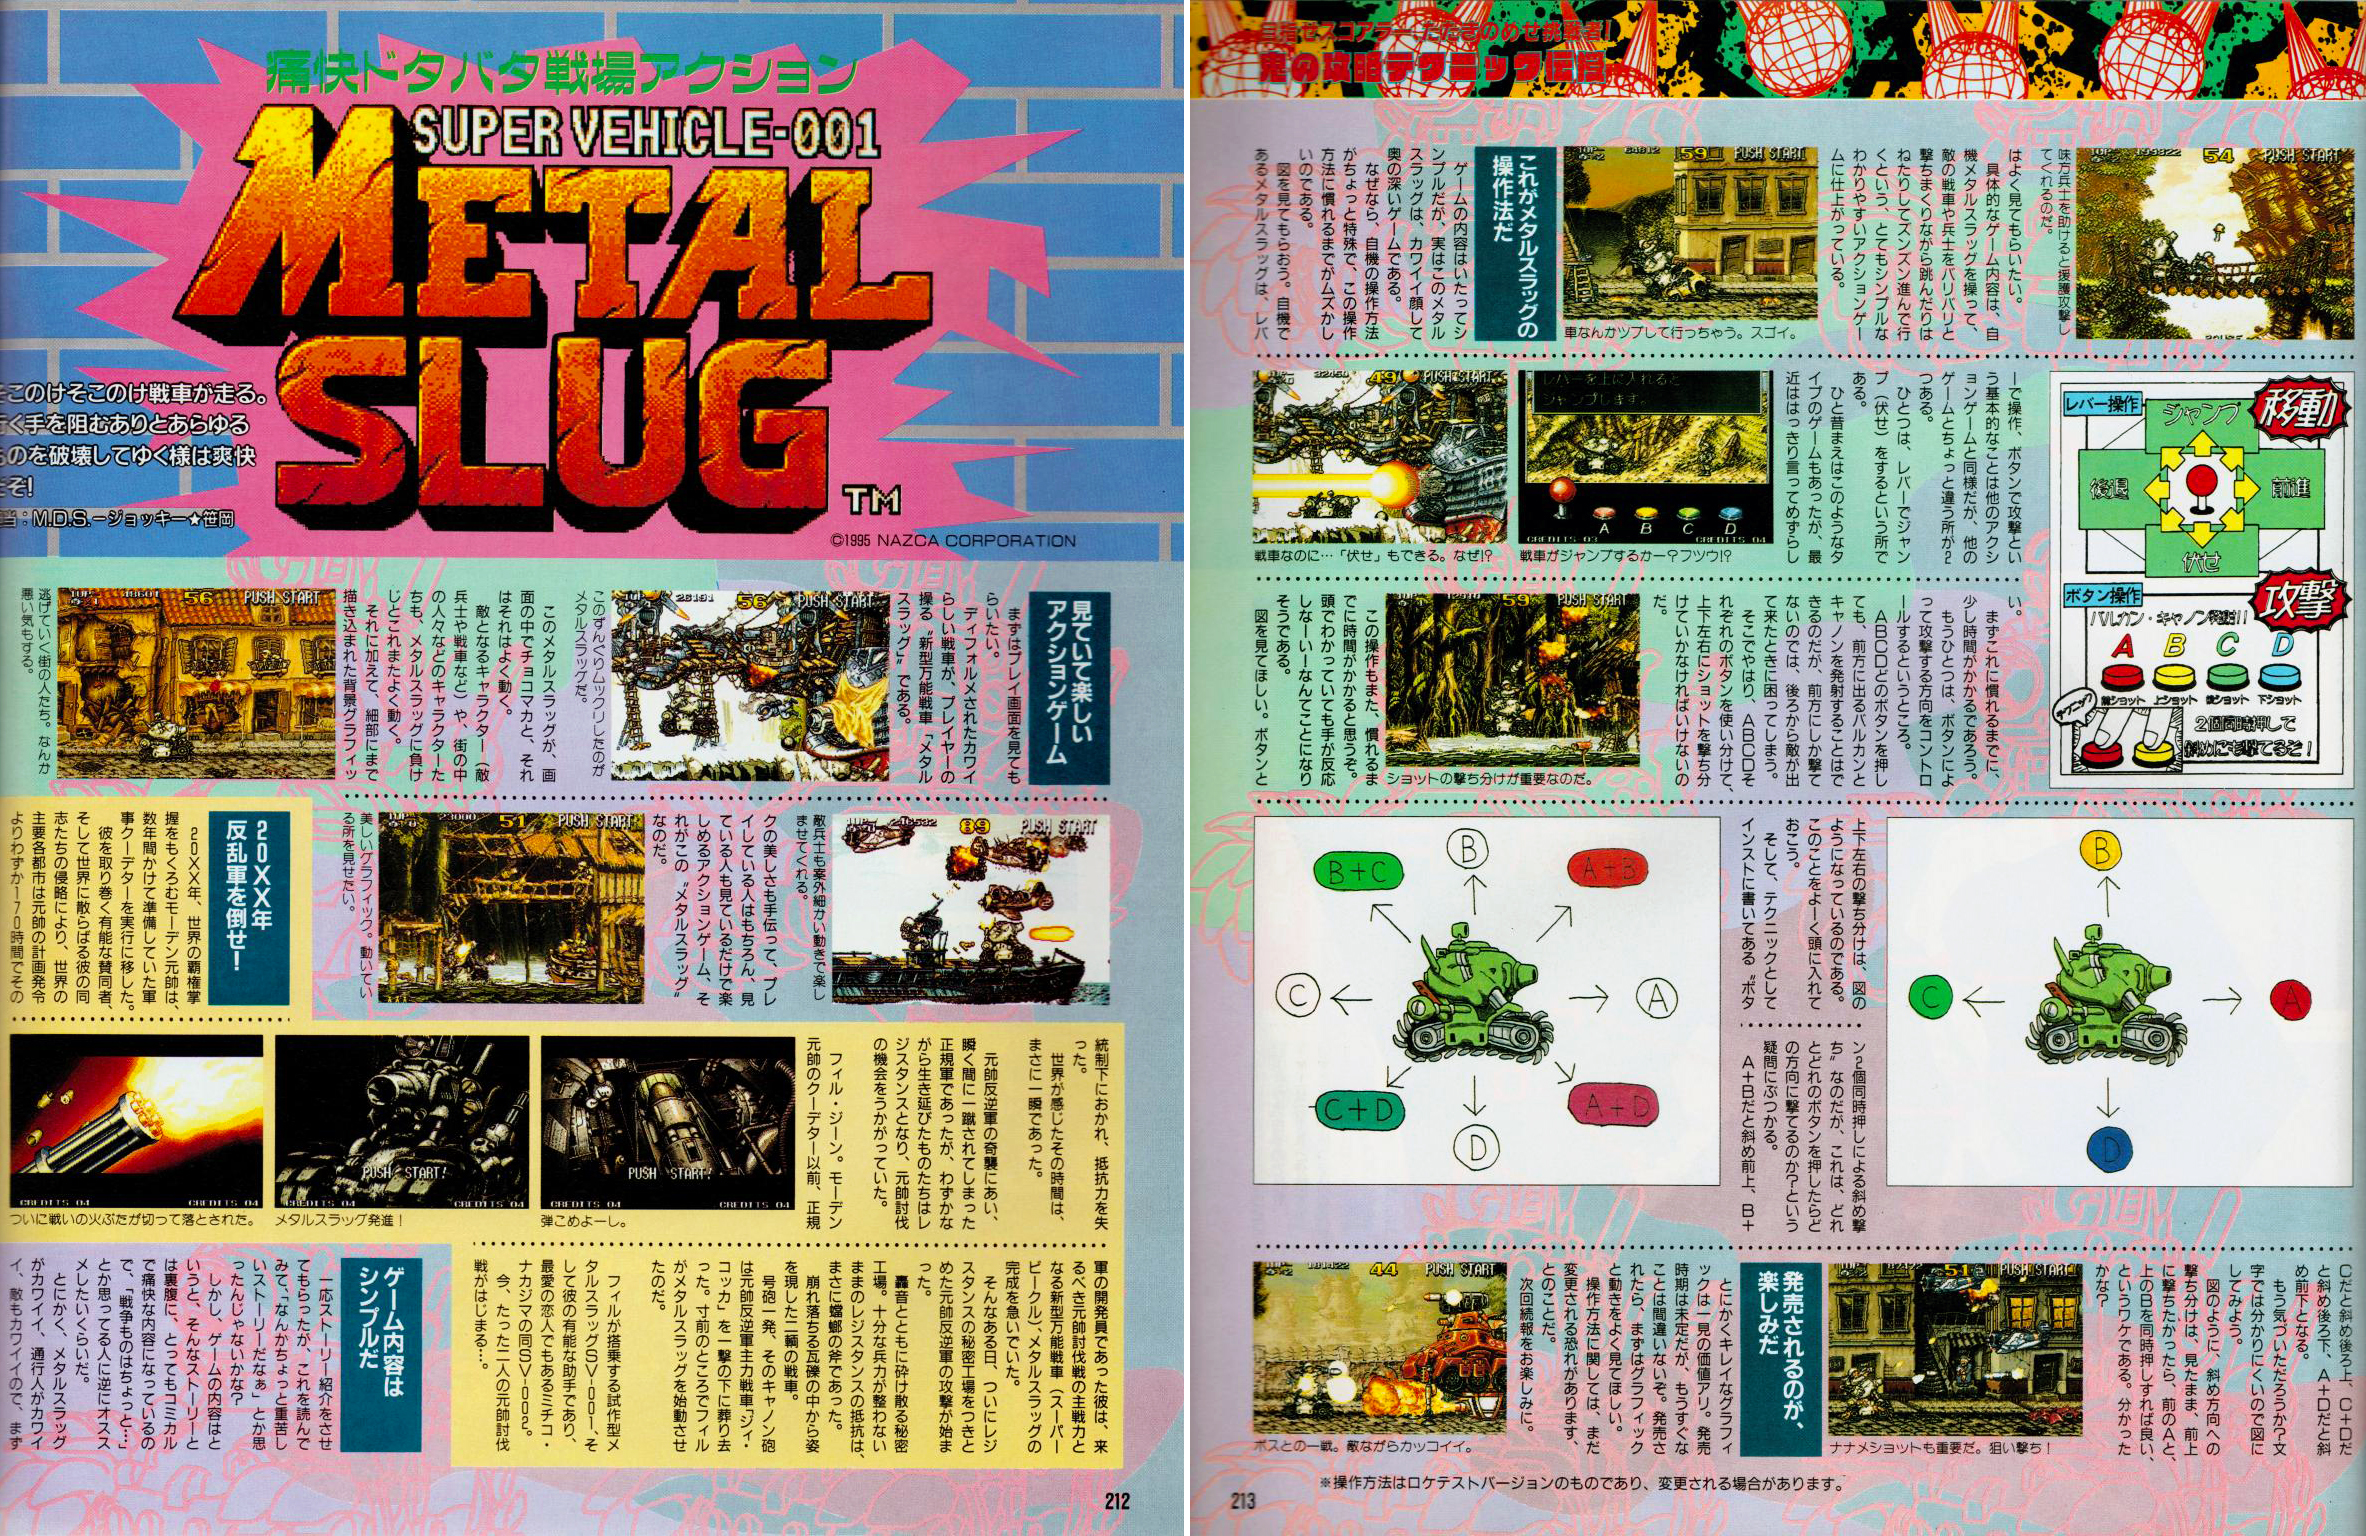 Neo Geo / NGCD - Fatal Fury Special - Endings - The Spriters Resource